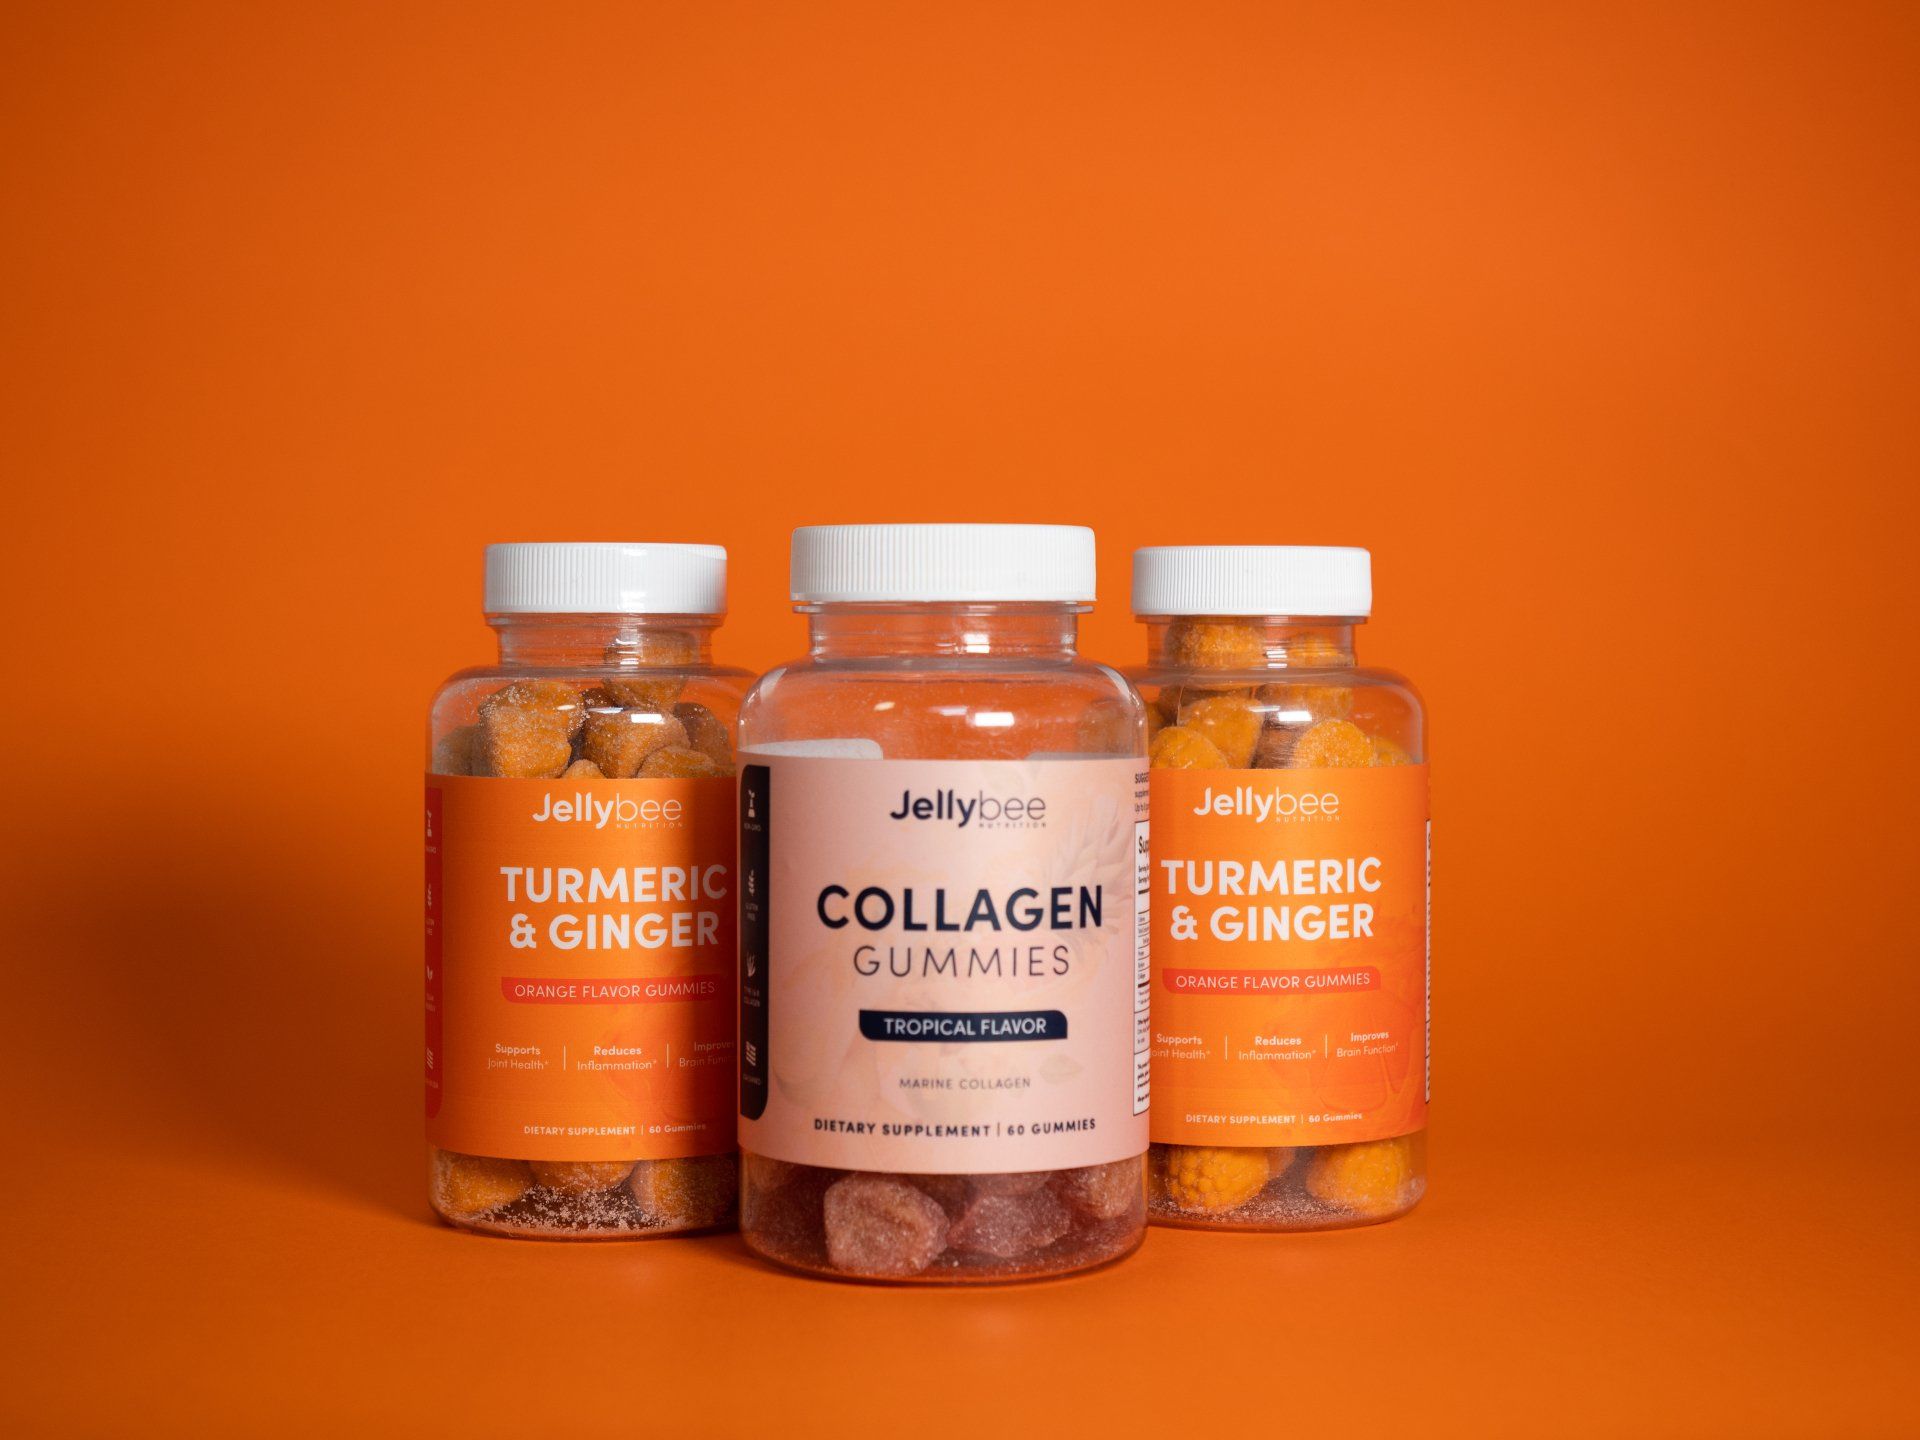 Three bottles of collagen gummies are sitting next to each other on an orange background.